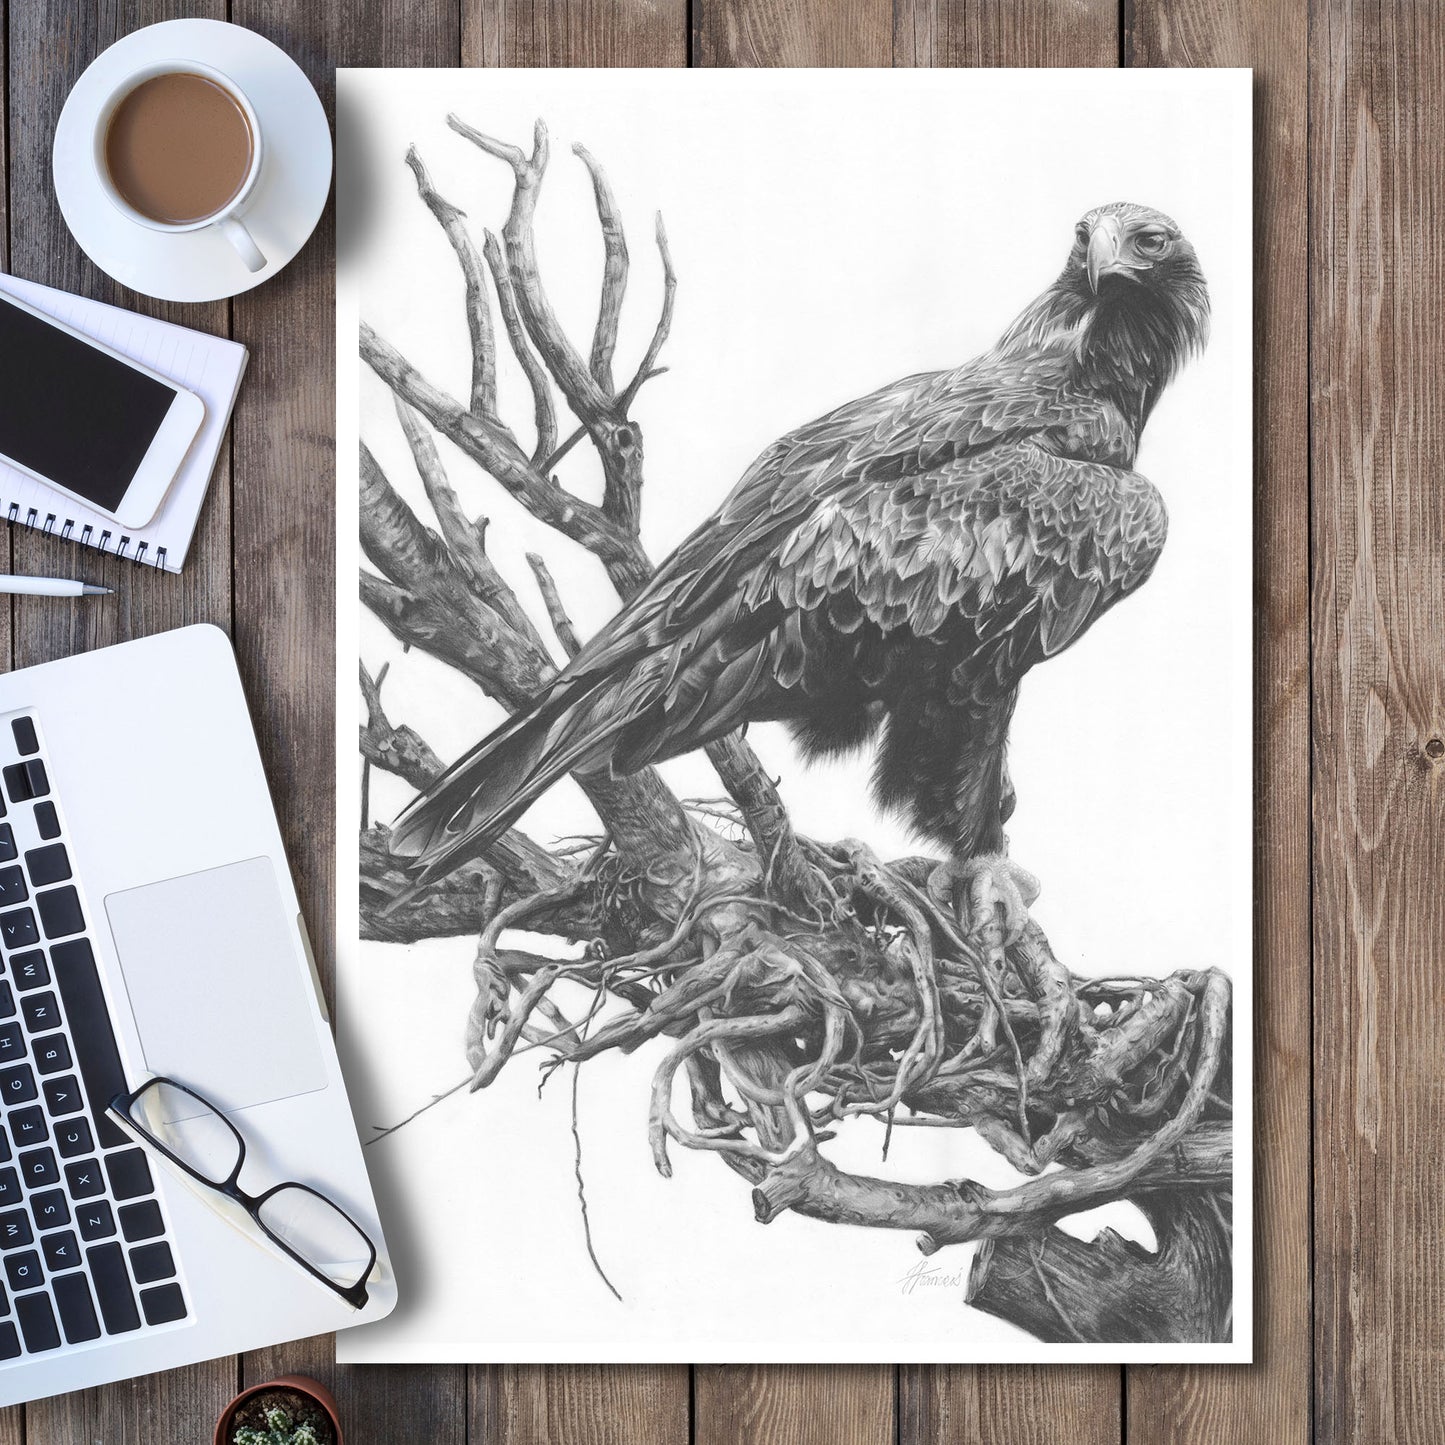 'Wedge-tailed Eagle' art print